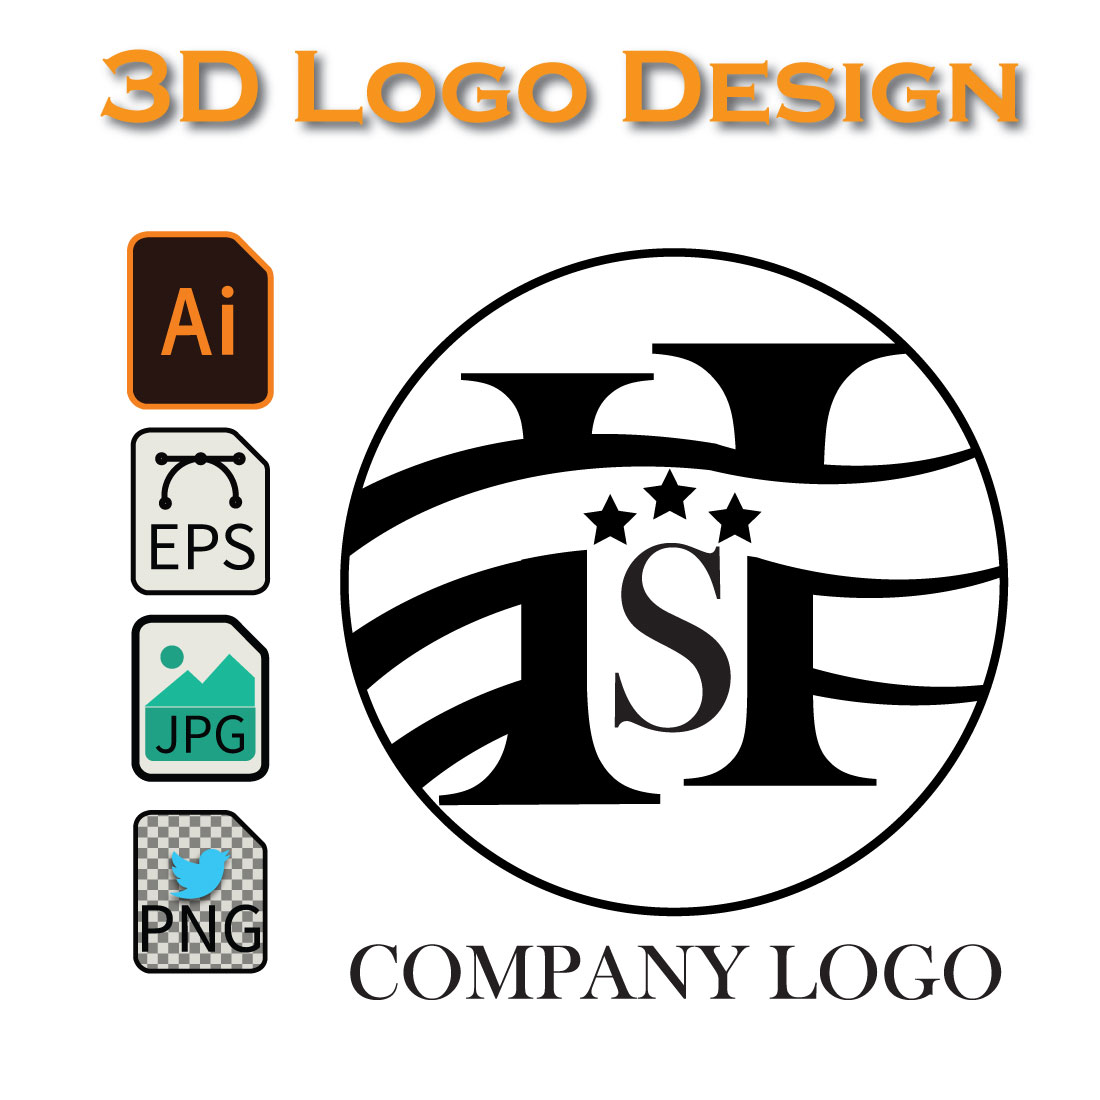 3D Logo design preview image.